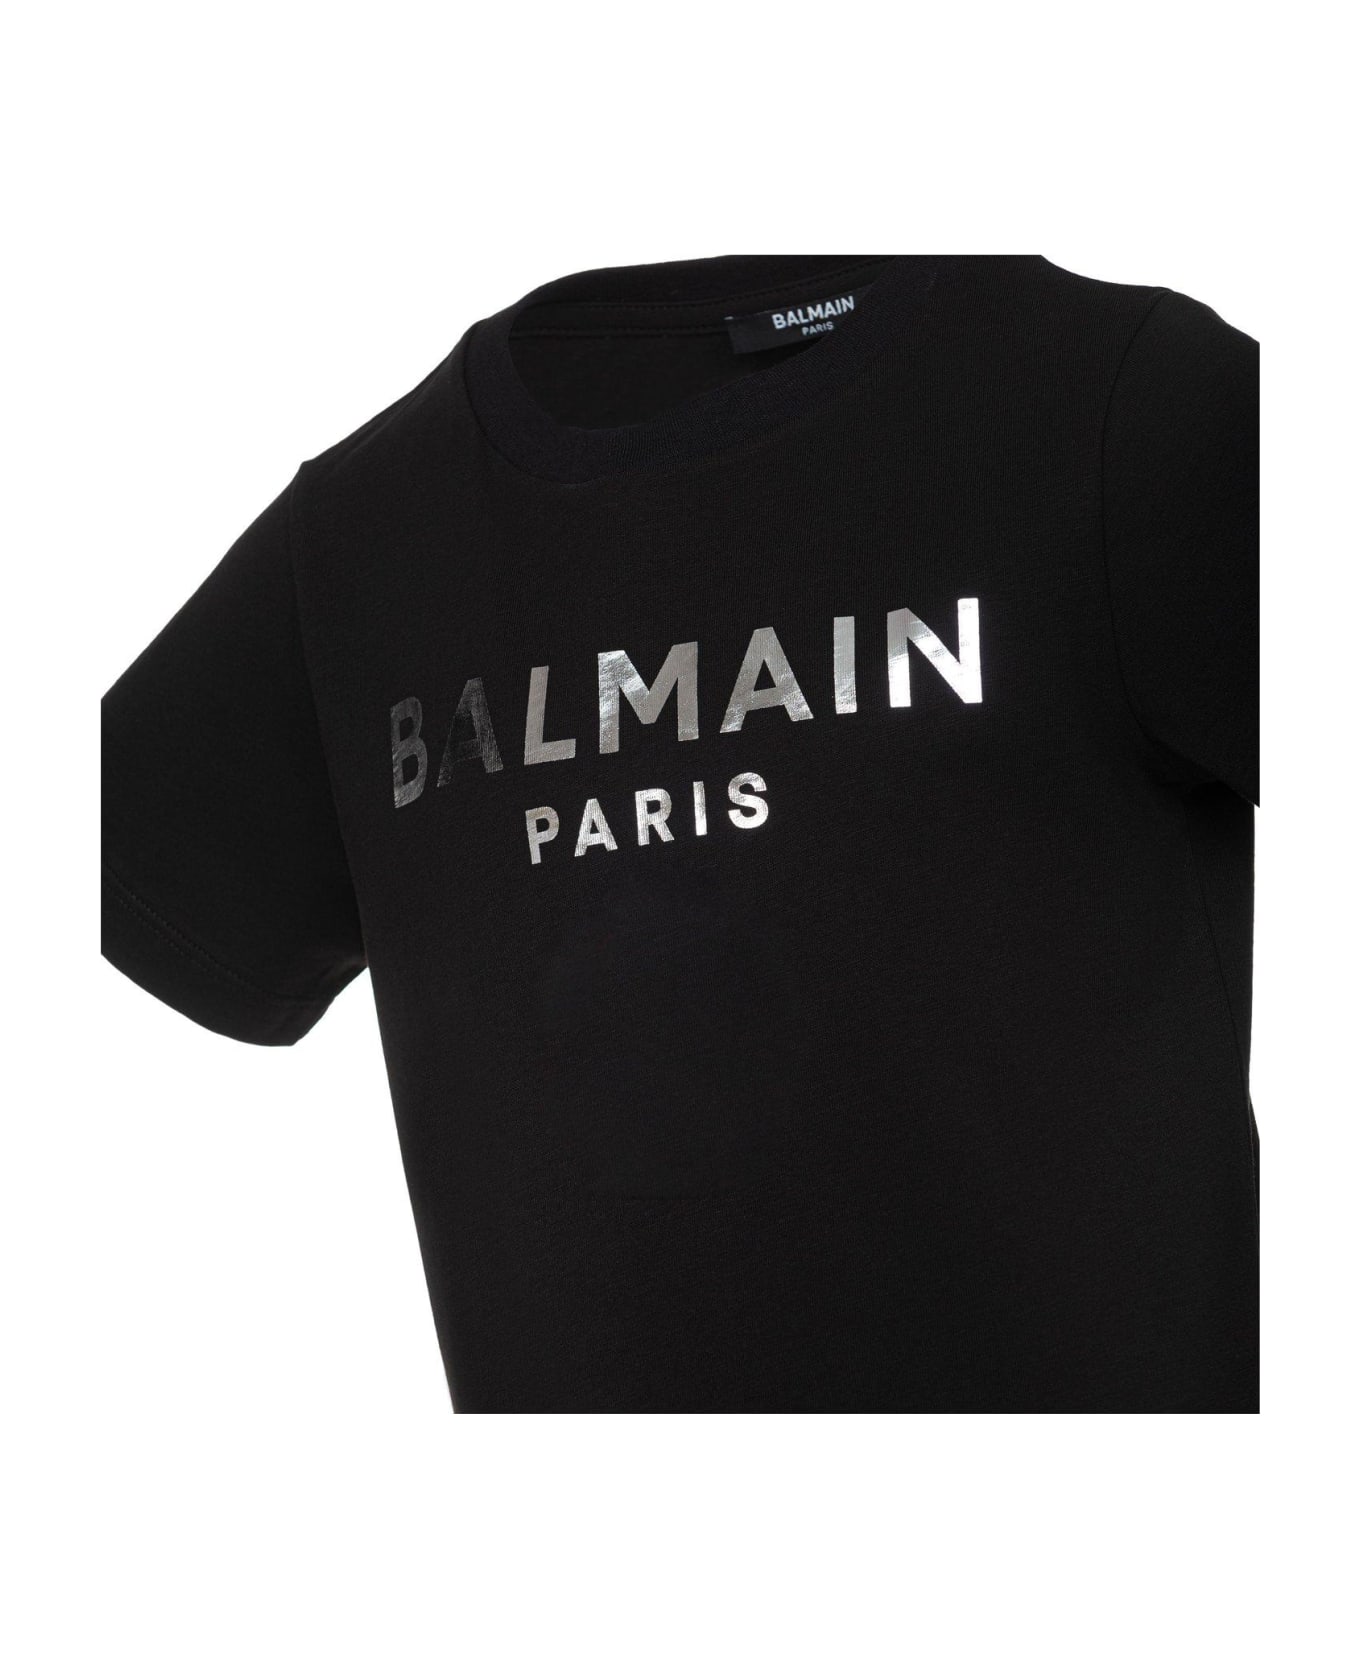 Balmain Logo Printed Crewneck T-shirt - Black/silver